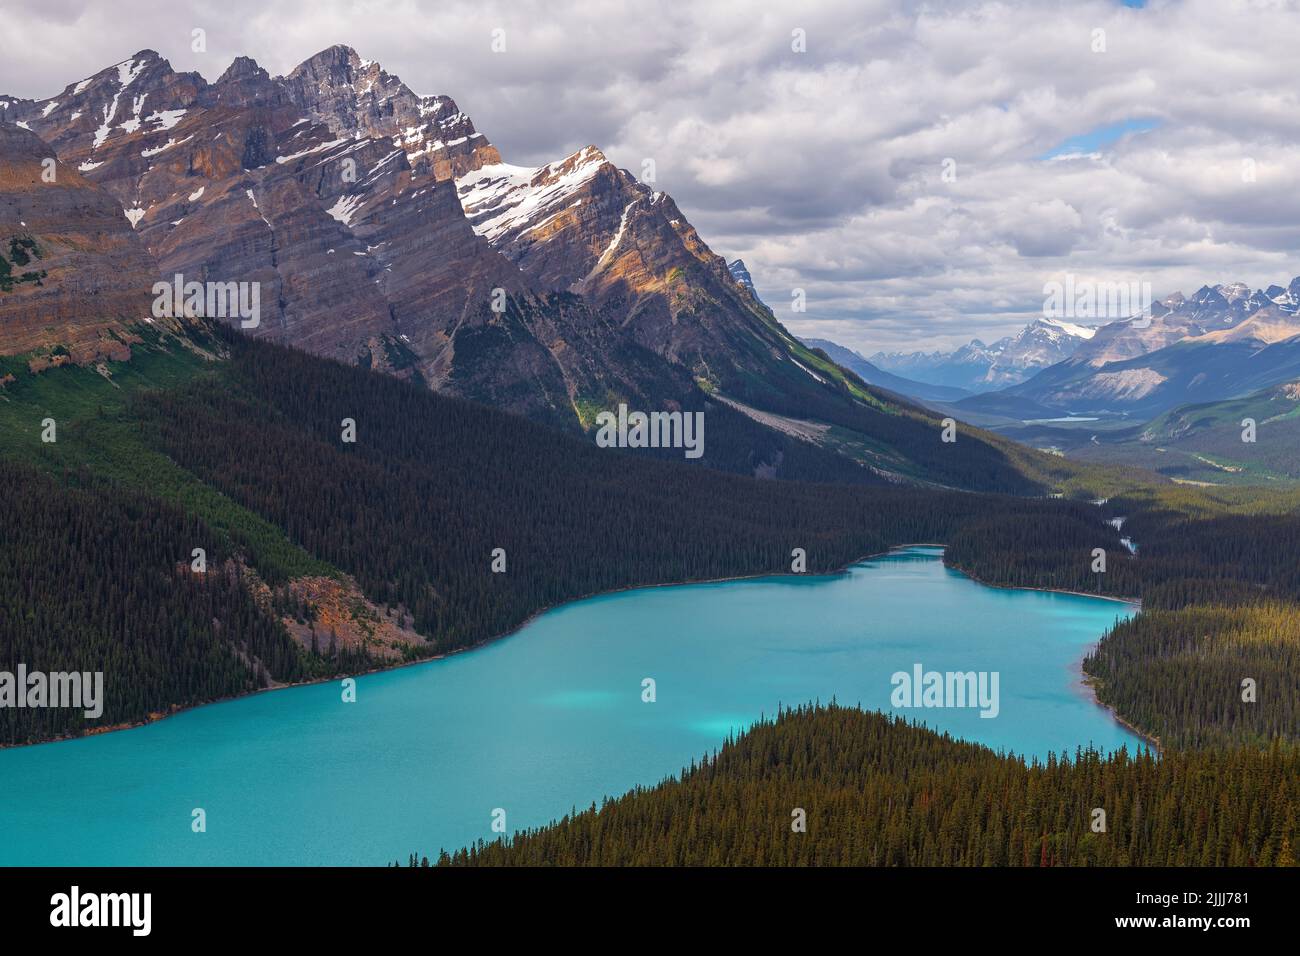 Lac Peyto, montagnes Rocheuses canadiennes, parc national Banff, Alberta, Canada. Banque D'Images